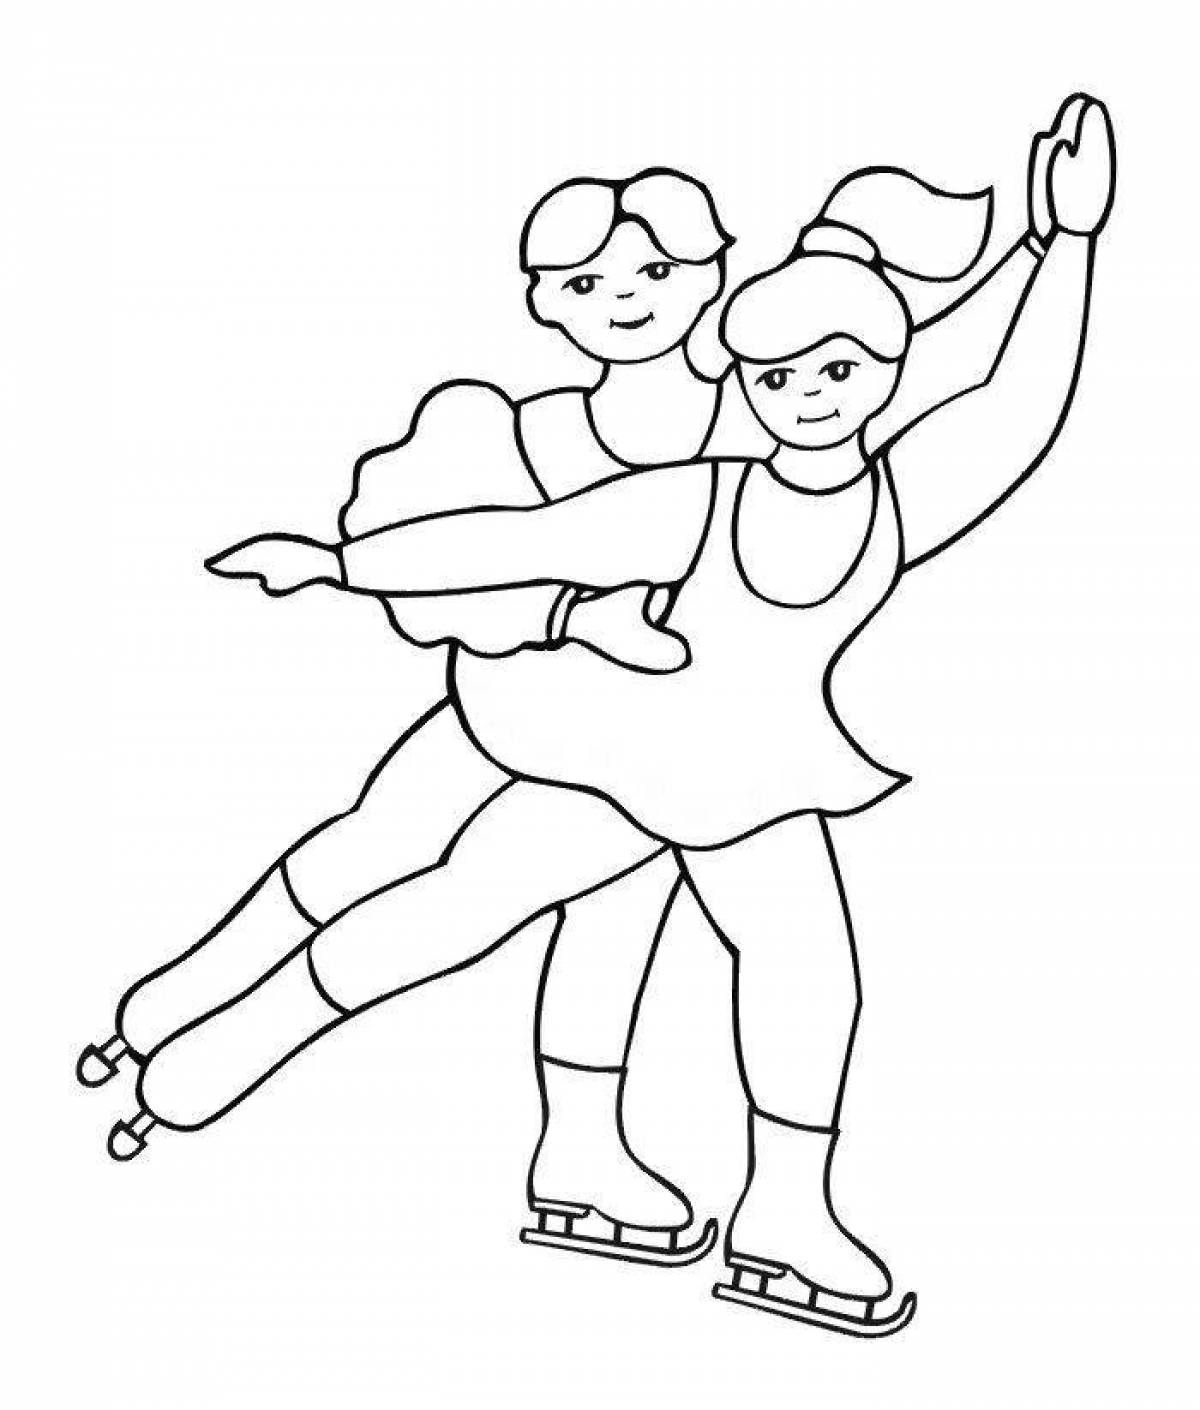 Balanced skaters